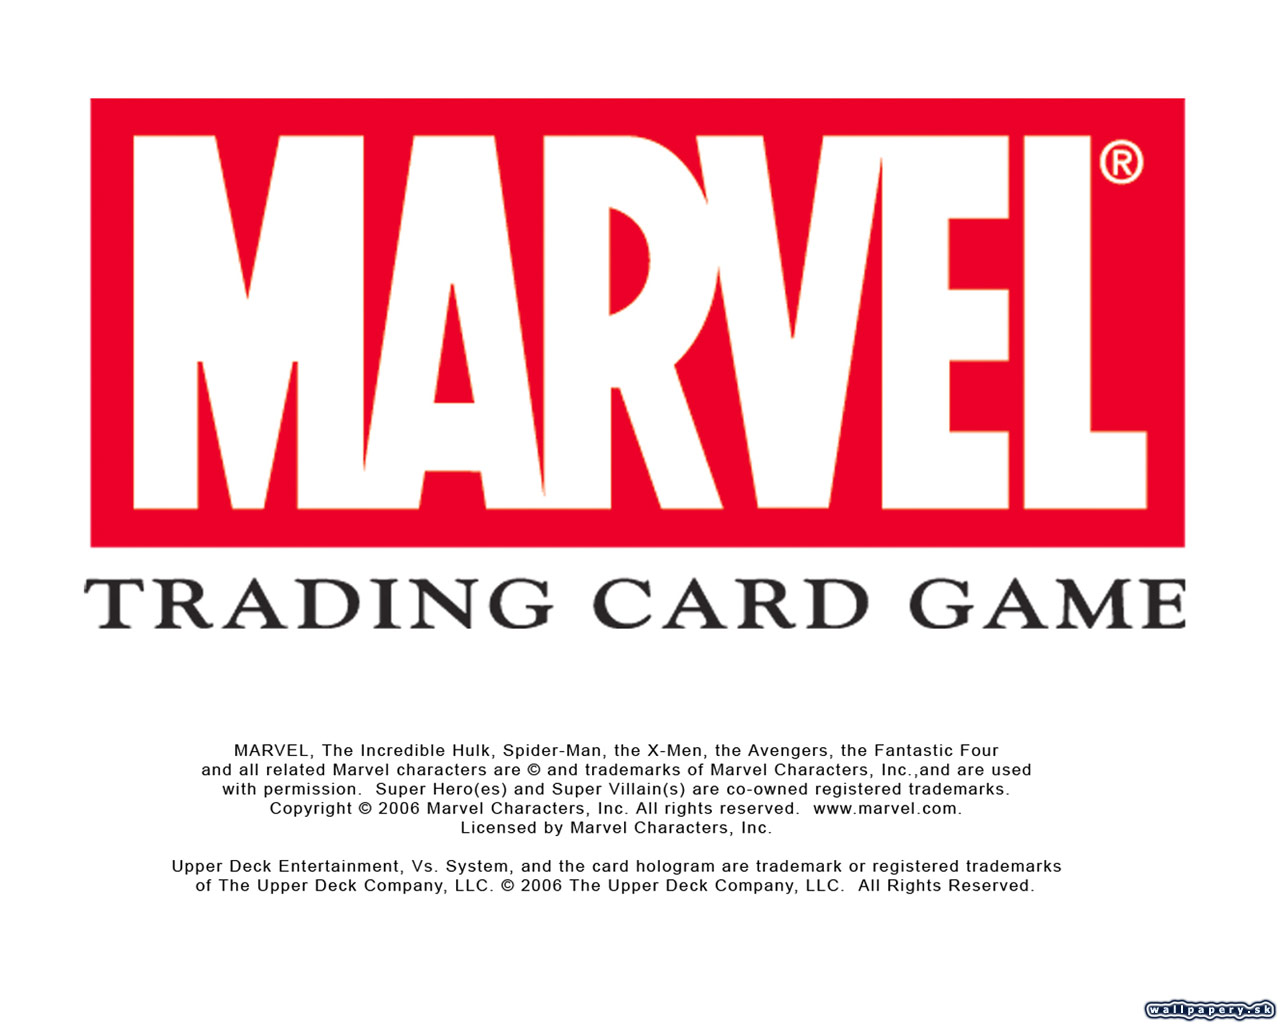 Marvel Trading Card Game - wallpaper 2